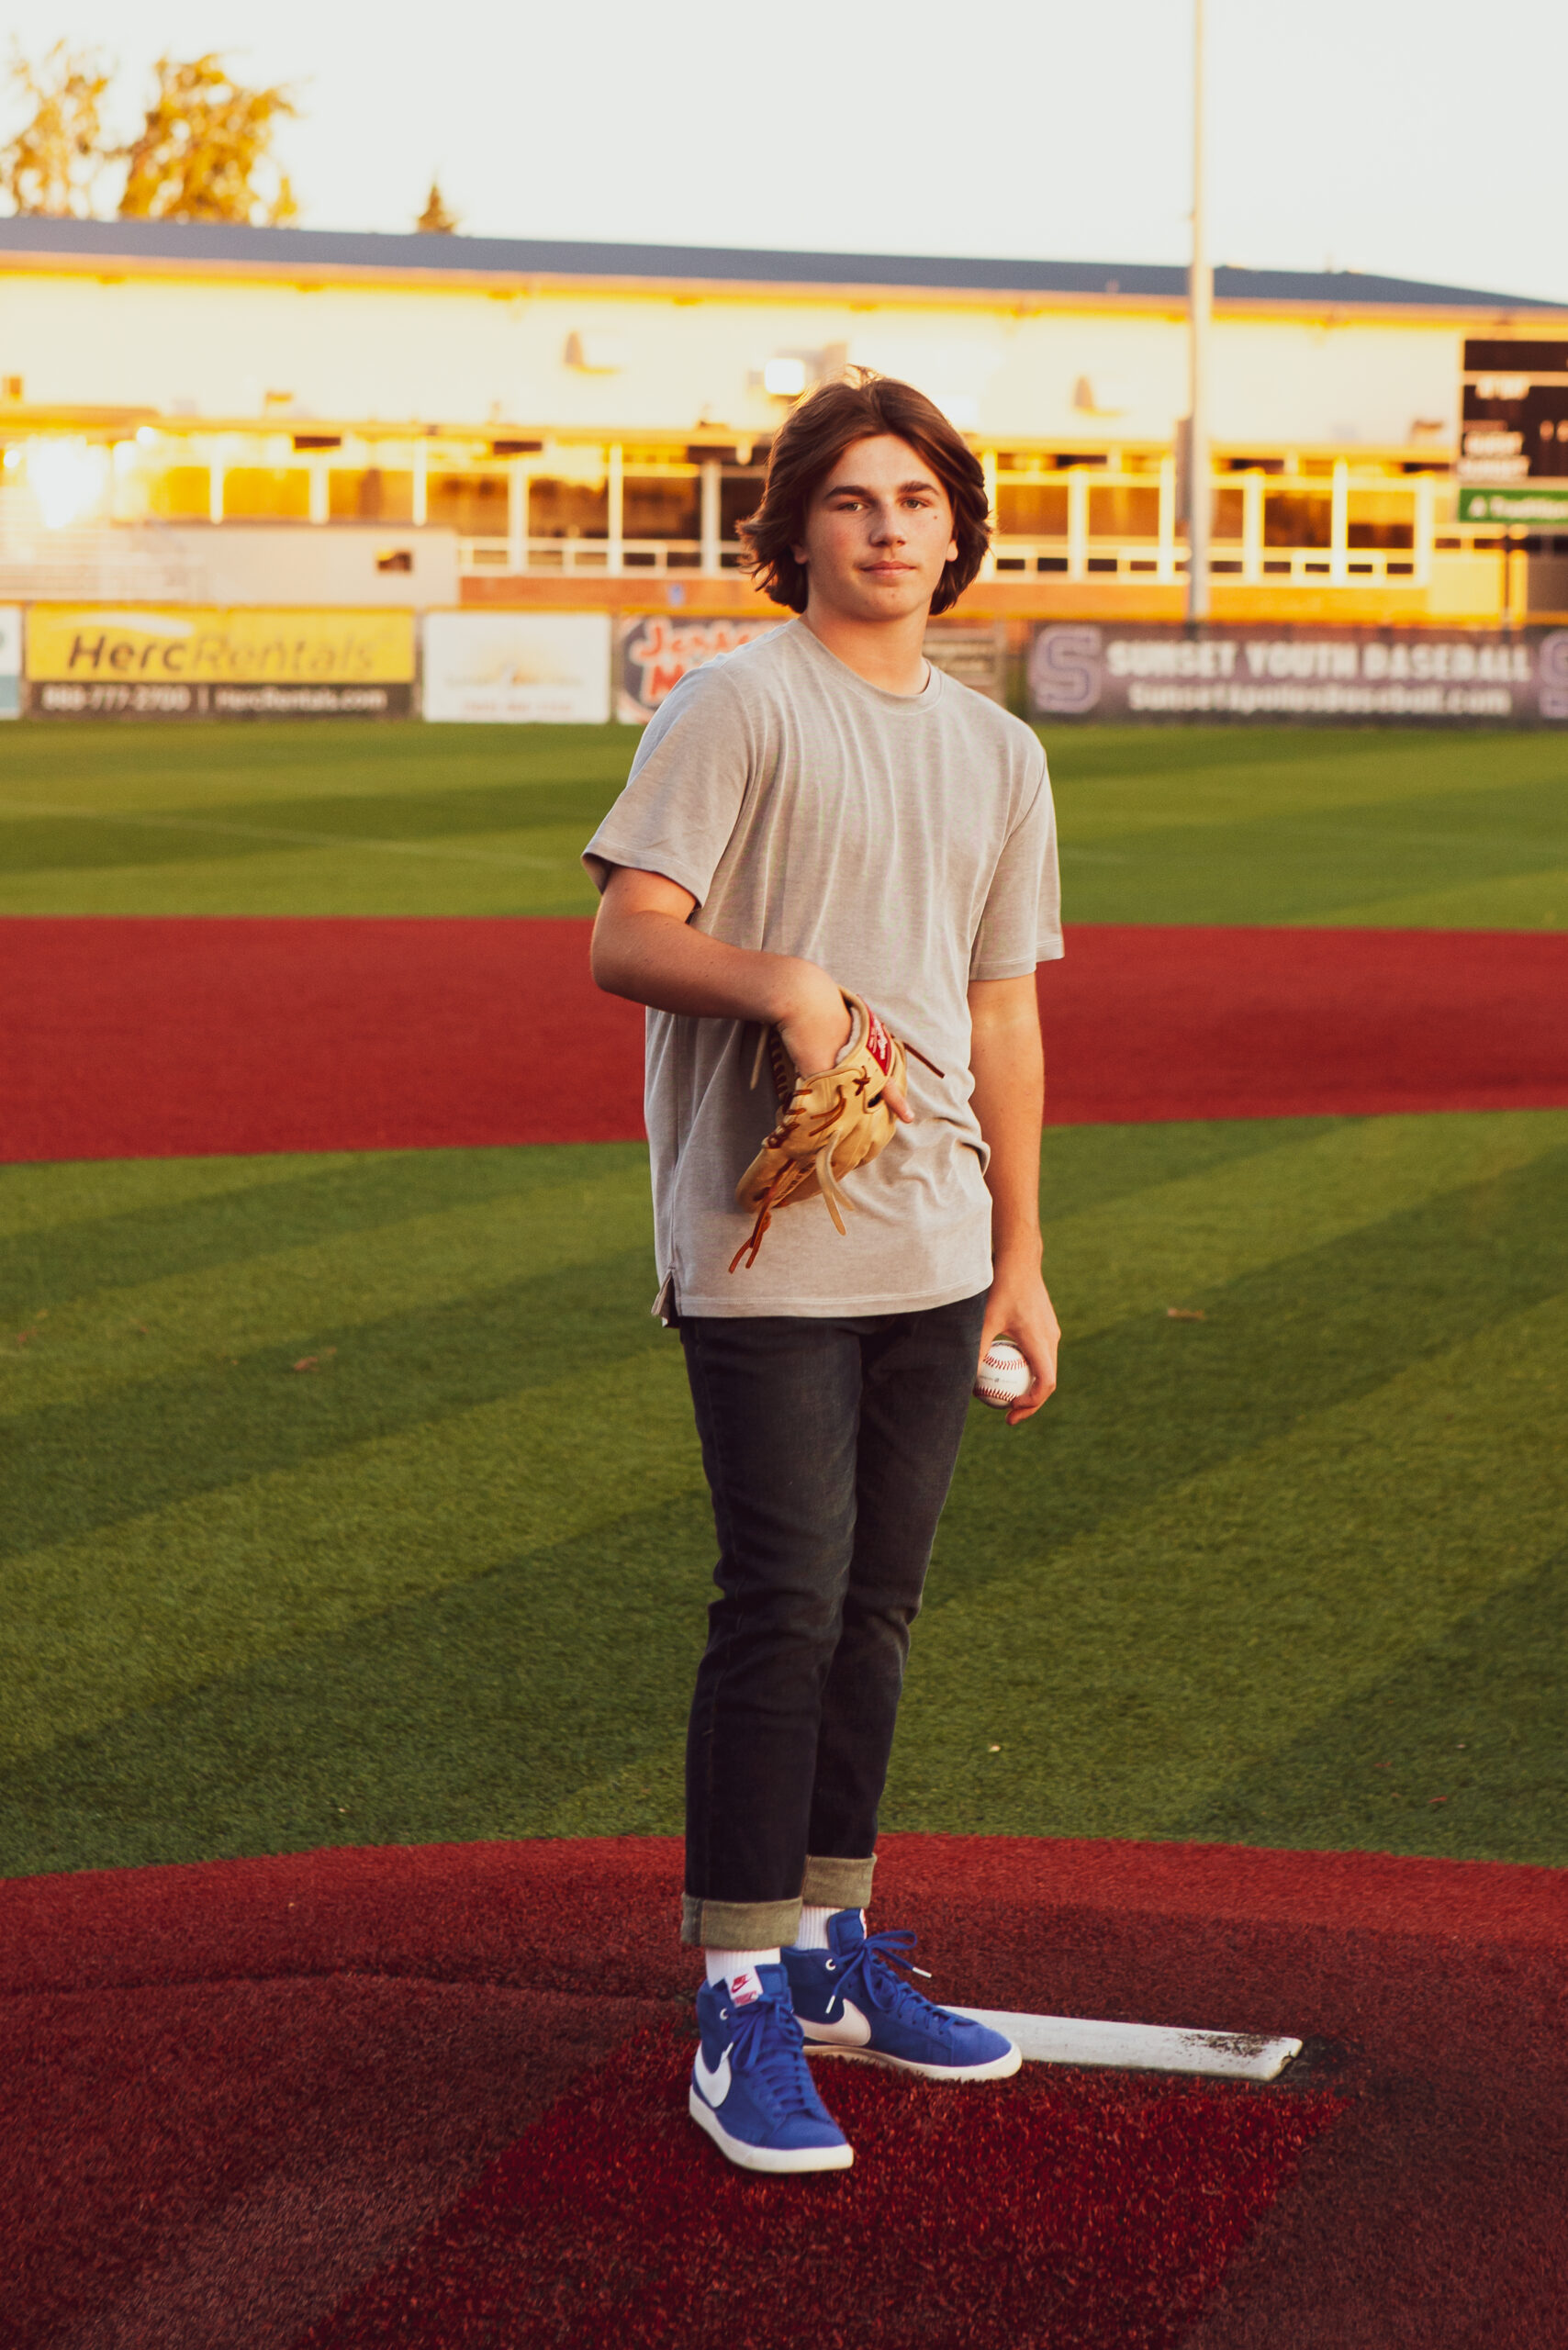 A man standing on top of a baseball field holding a ball.